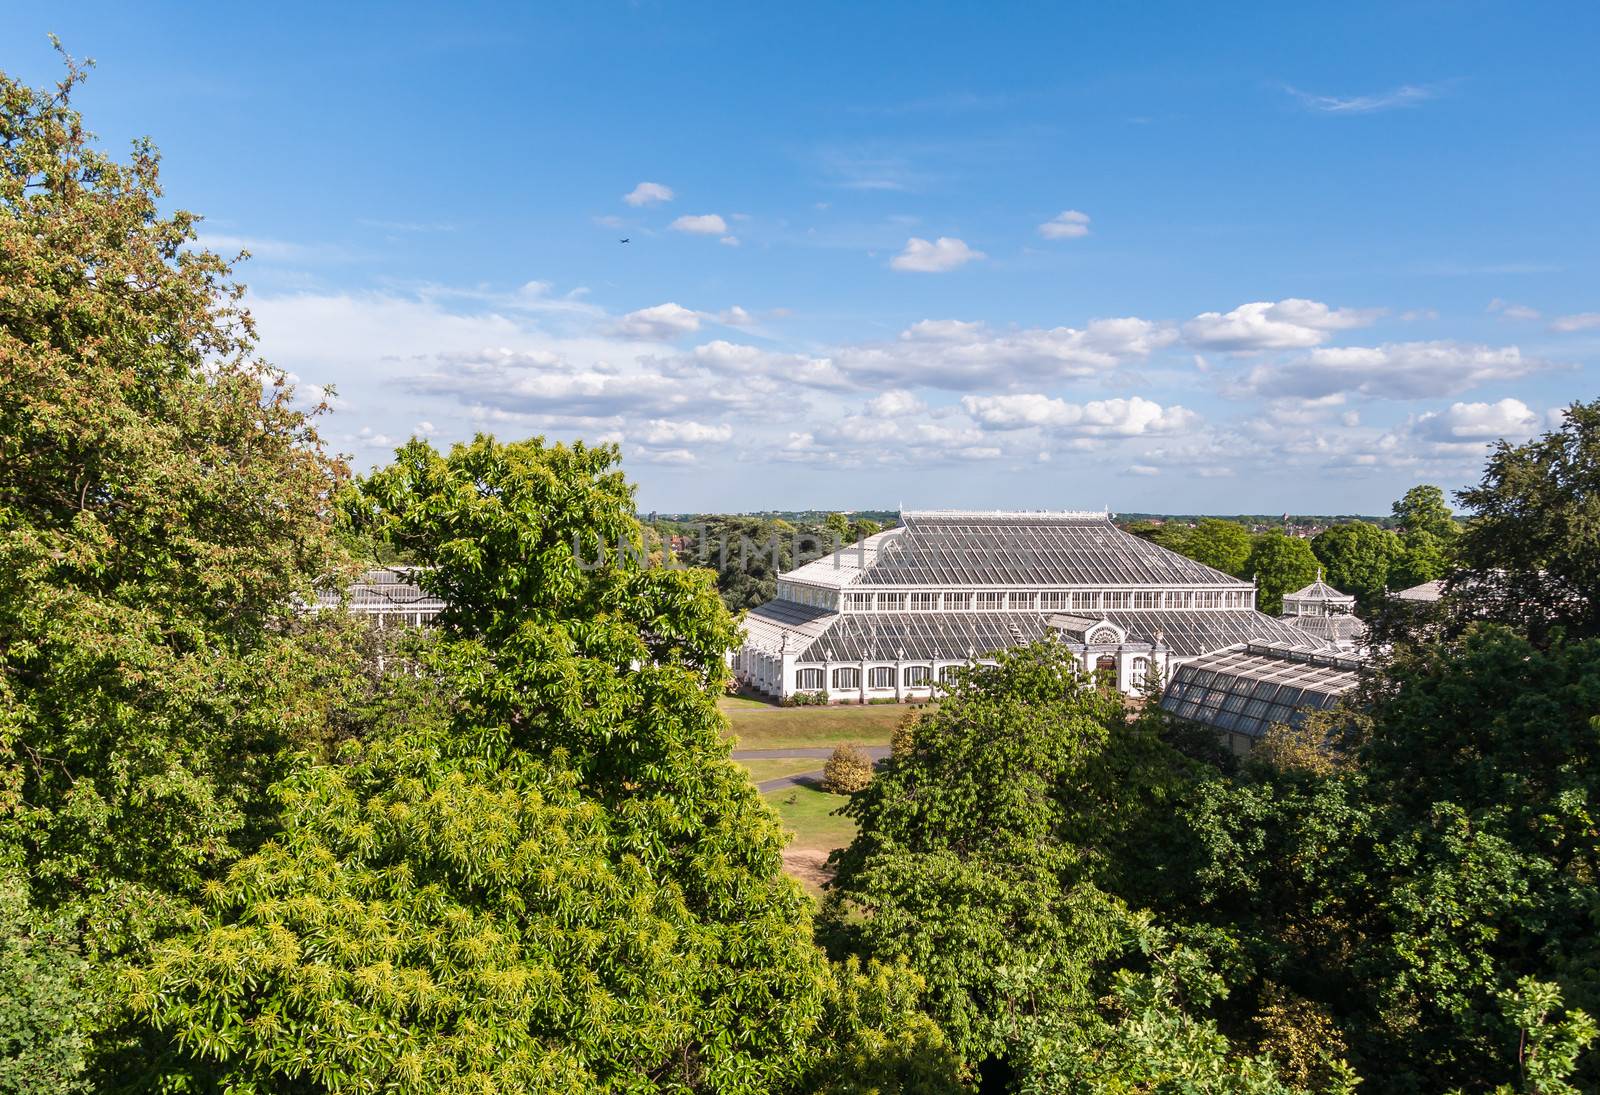 Temperate House in Kew Royal Botanic Gardens, London, England. View from treetop walkway.